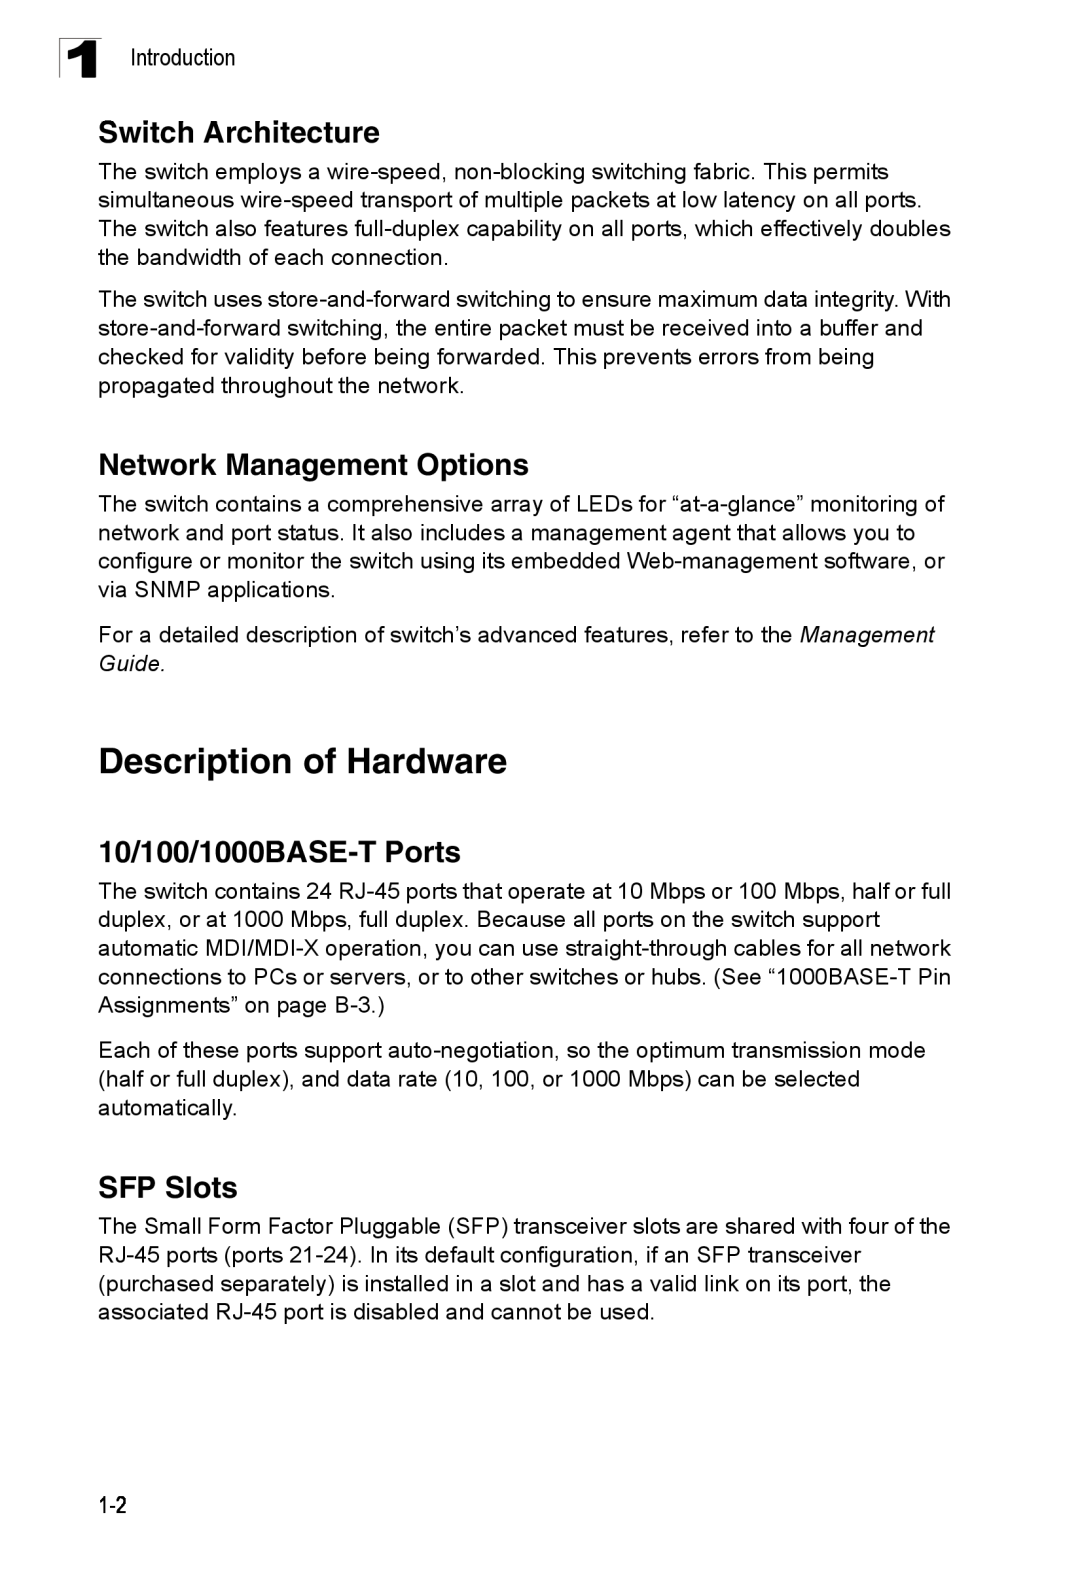 Accton Technology ES4324 Description of Hardware, Switch Architecture, Network Management Options, 10/100/1000BASE-T Ports 